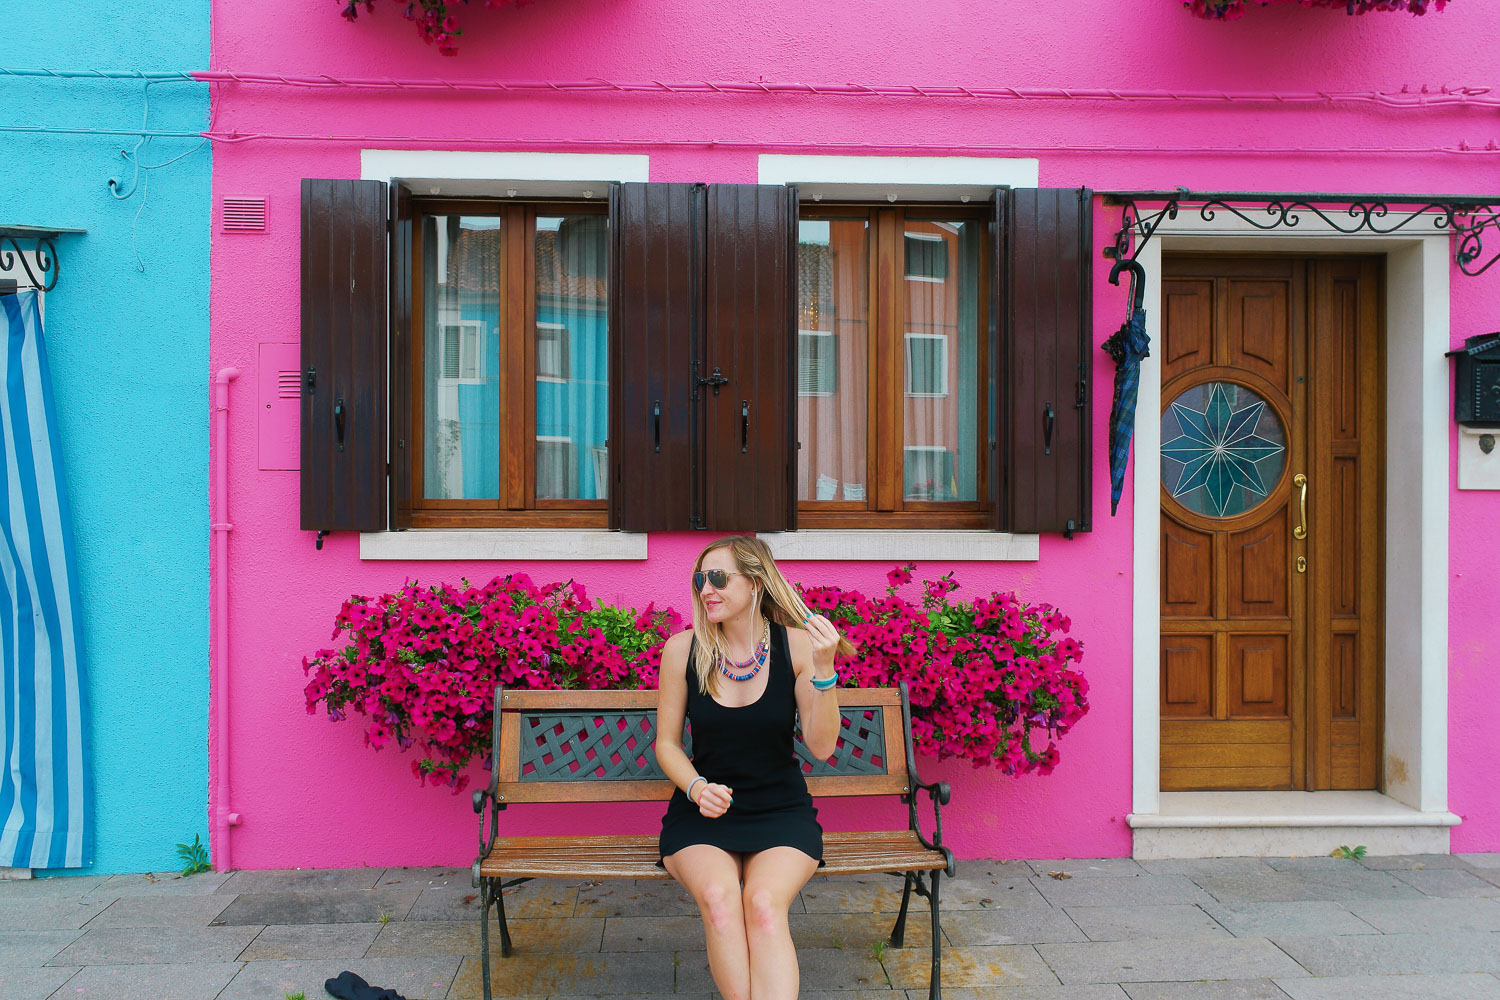 Italy's most photogenic town: Burano